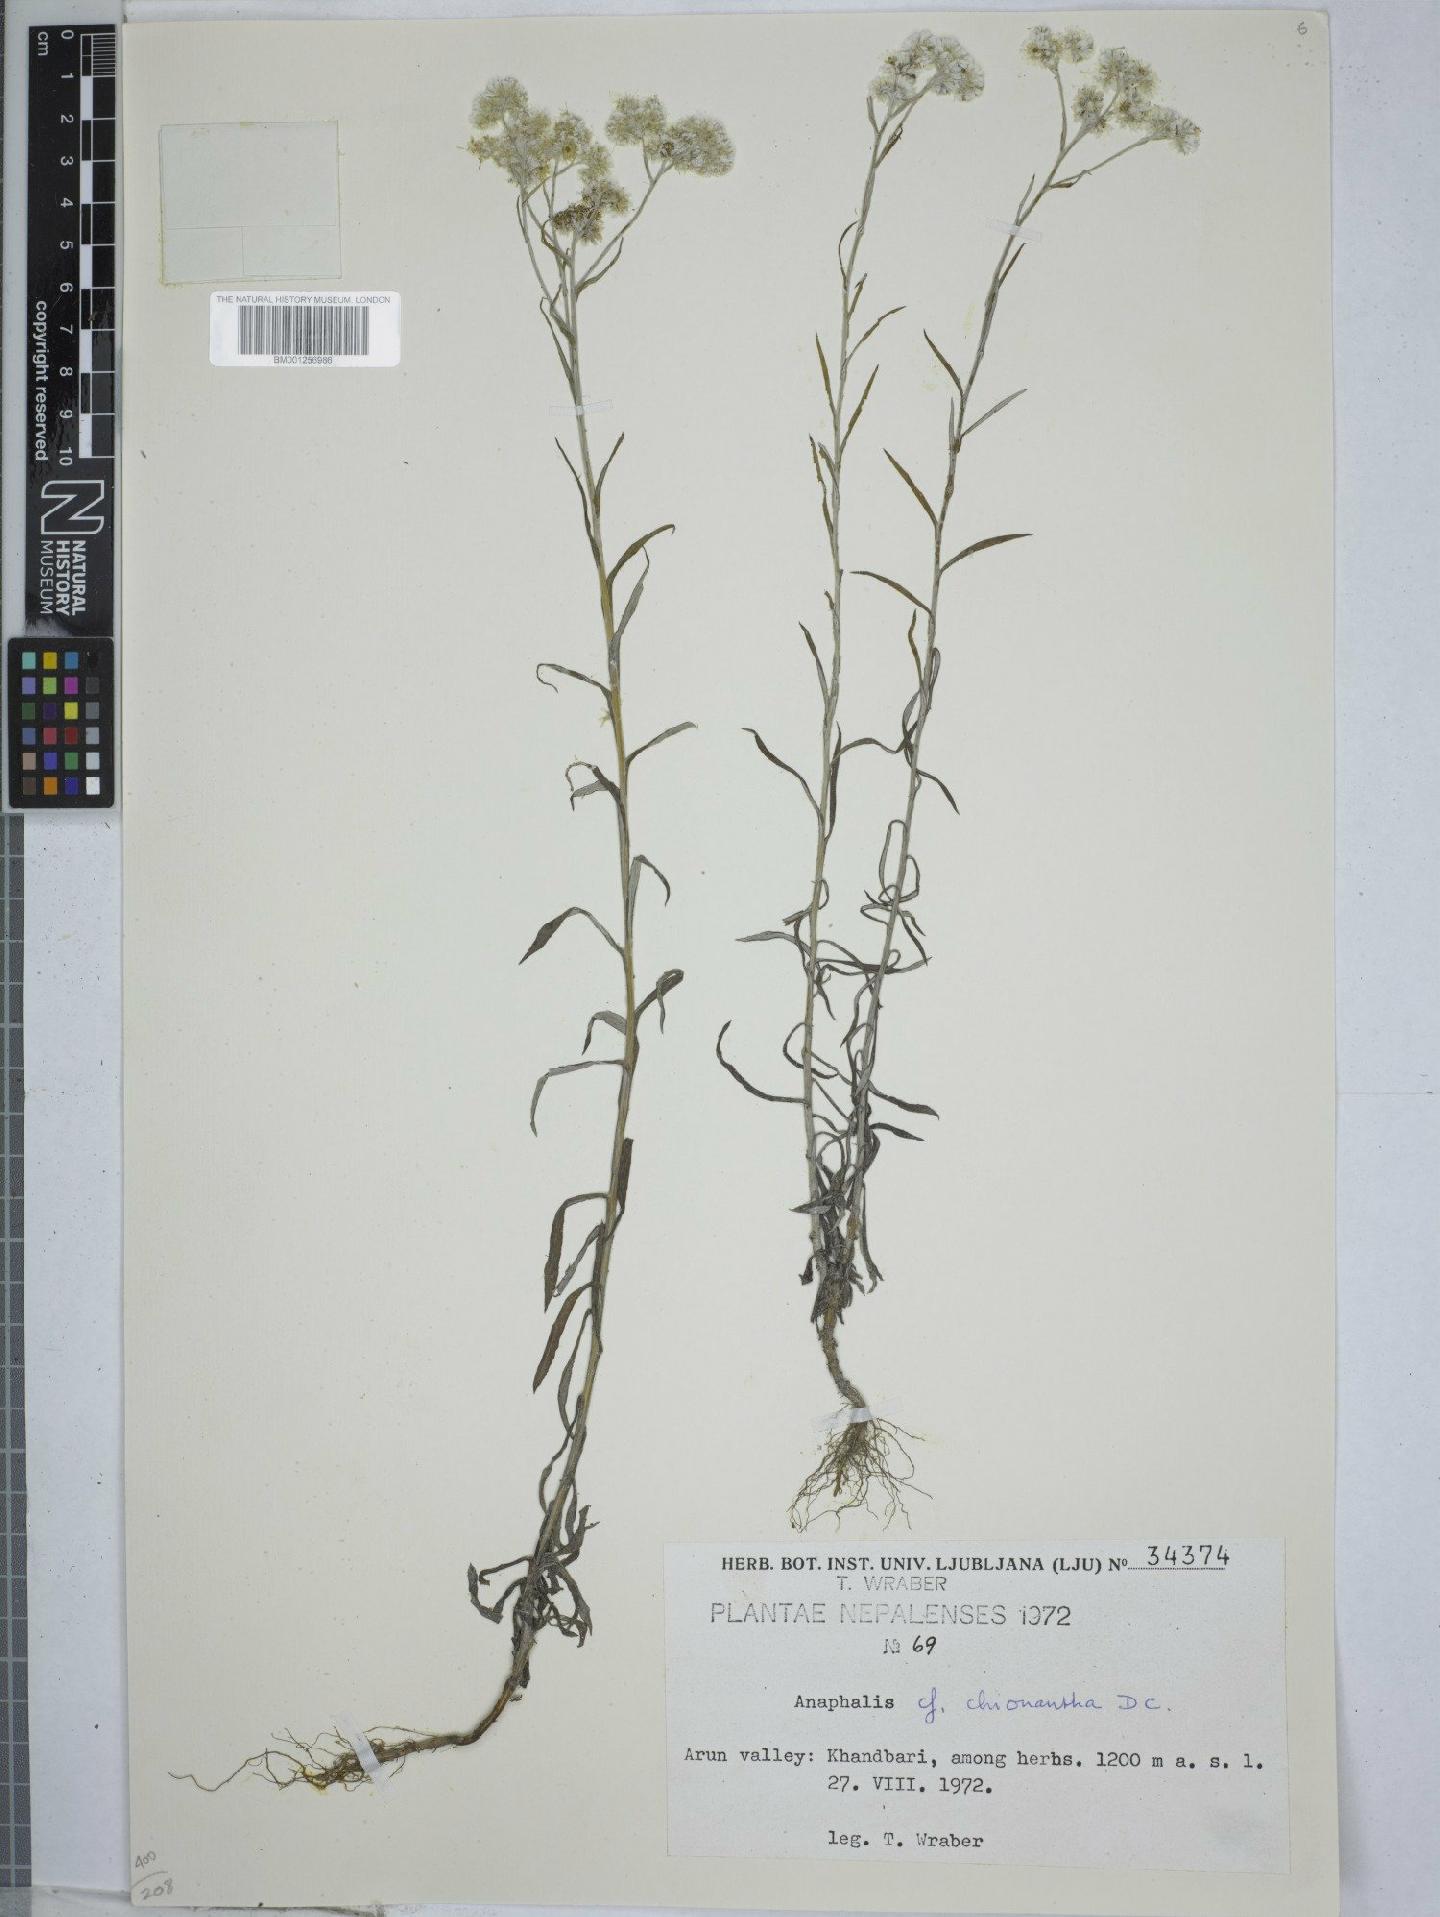 To NHMUK collection (Anaphalis chionantha DC.; NHMUK:ecatalogue:9151788)